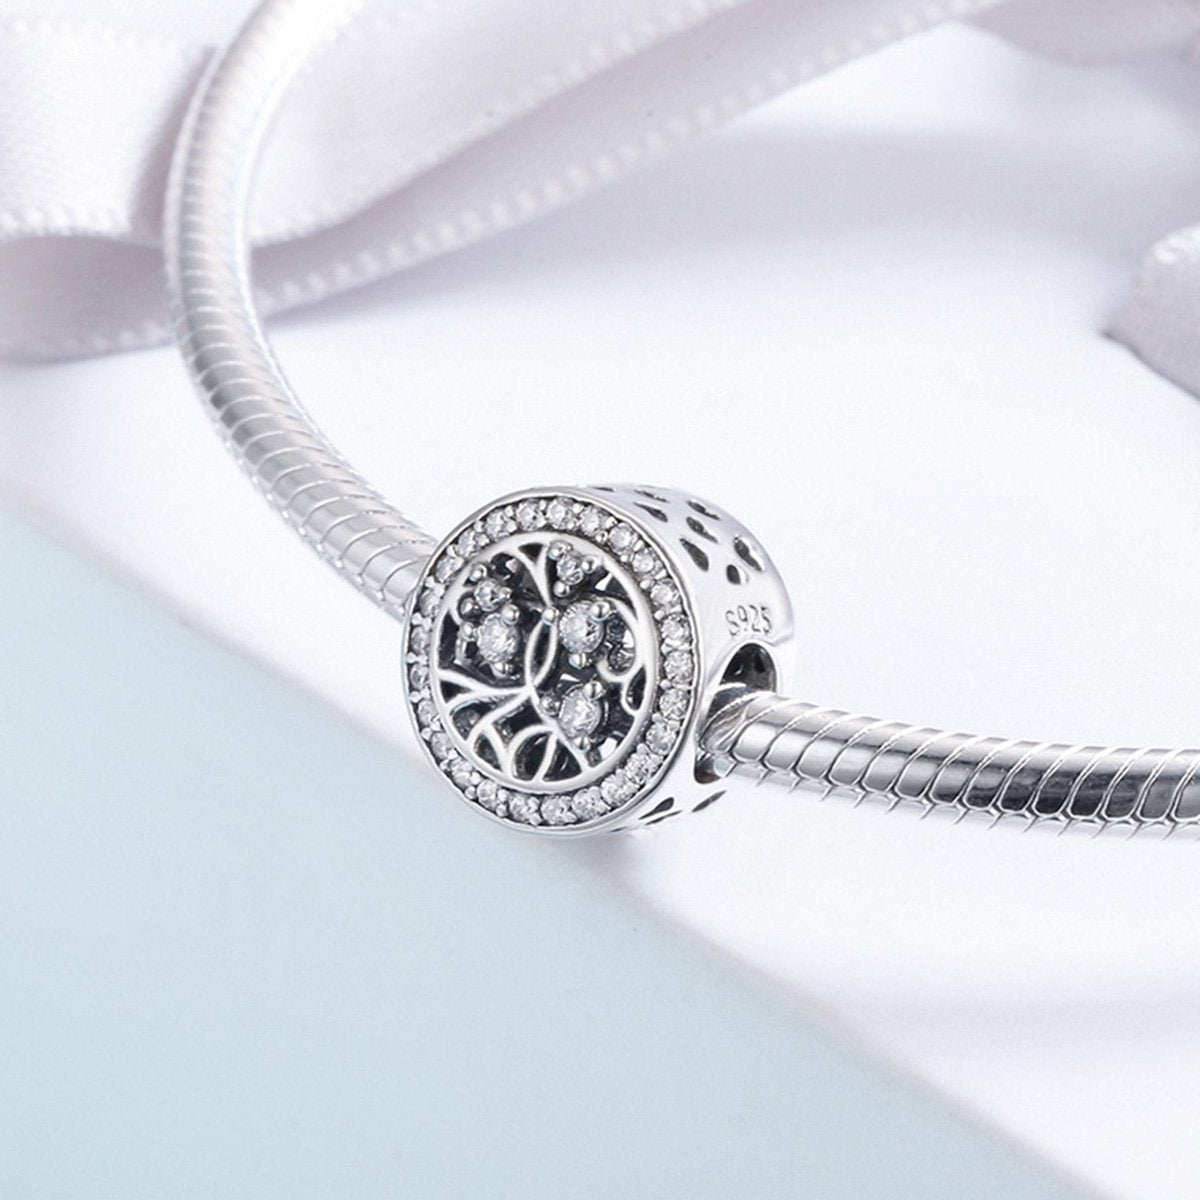 Sterling 925 silver charm the Tree bead pendant fits Pandora charm and European charm bracelet Xaxe.com